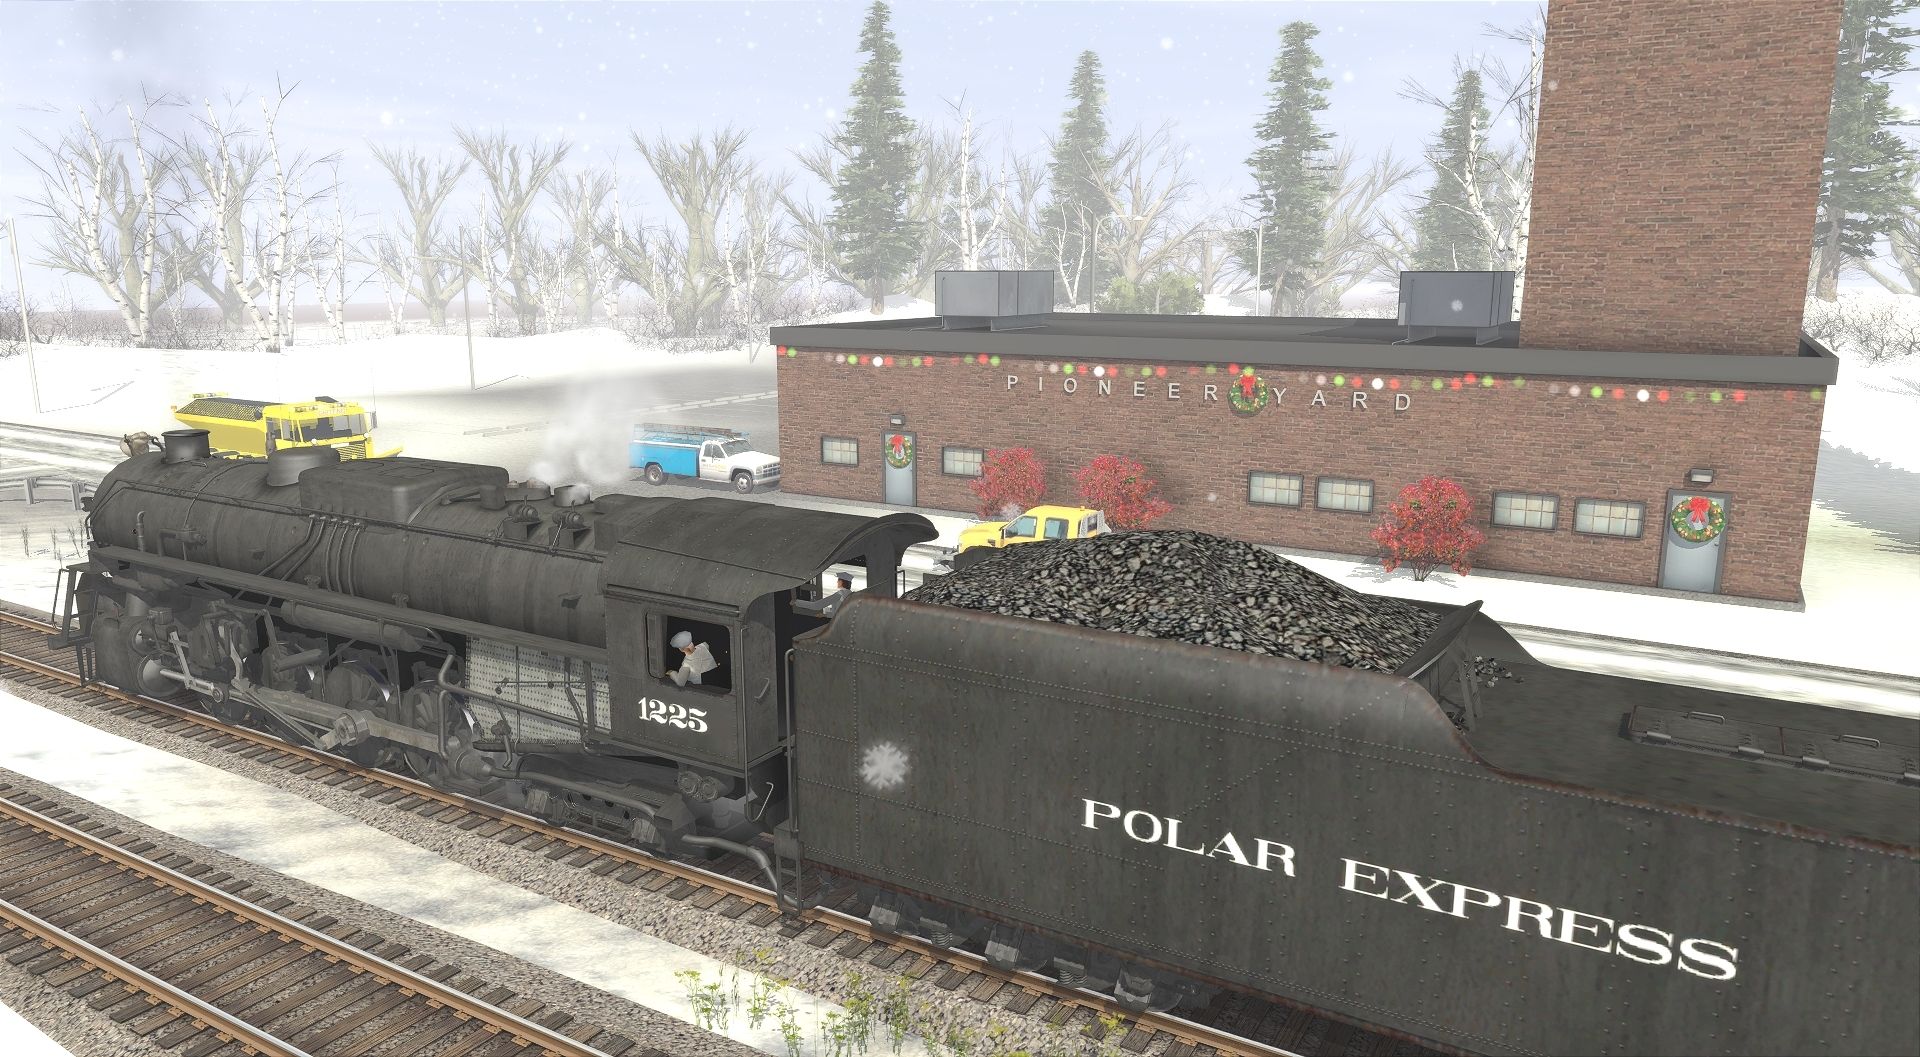 Polar-Express-enters-Pioneer-Yard.jpg